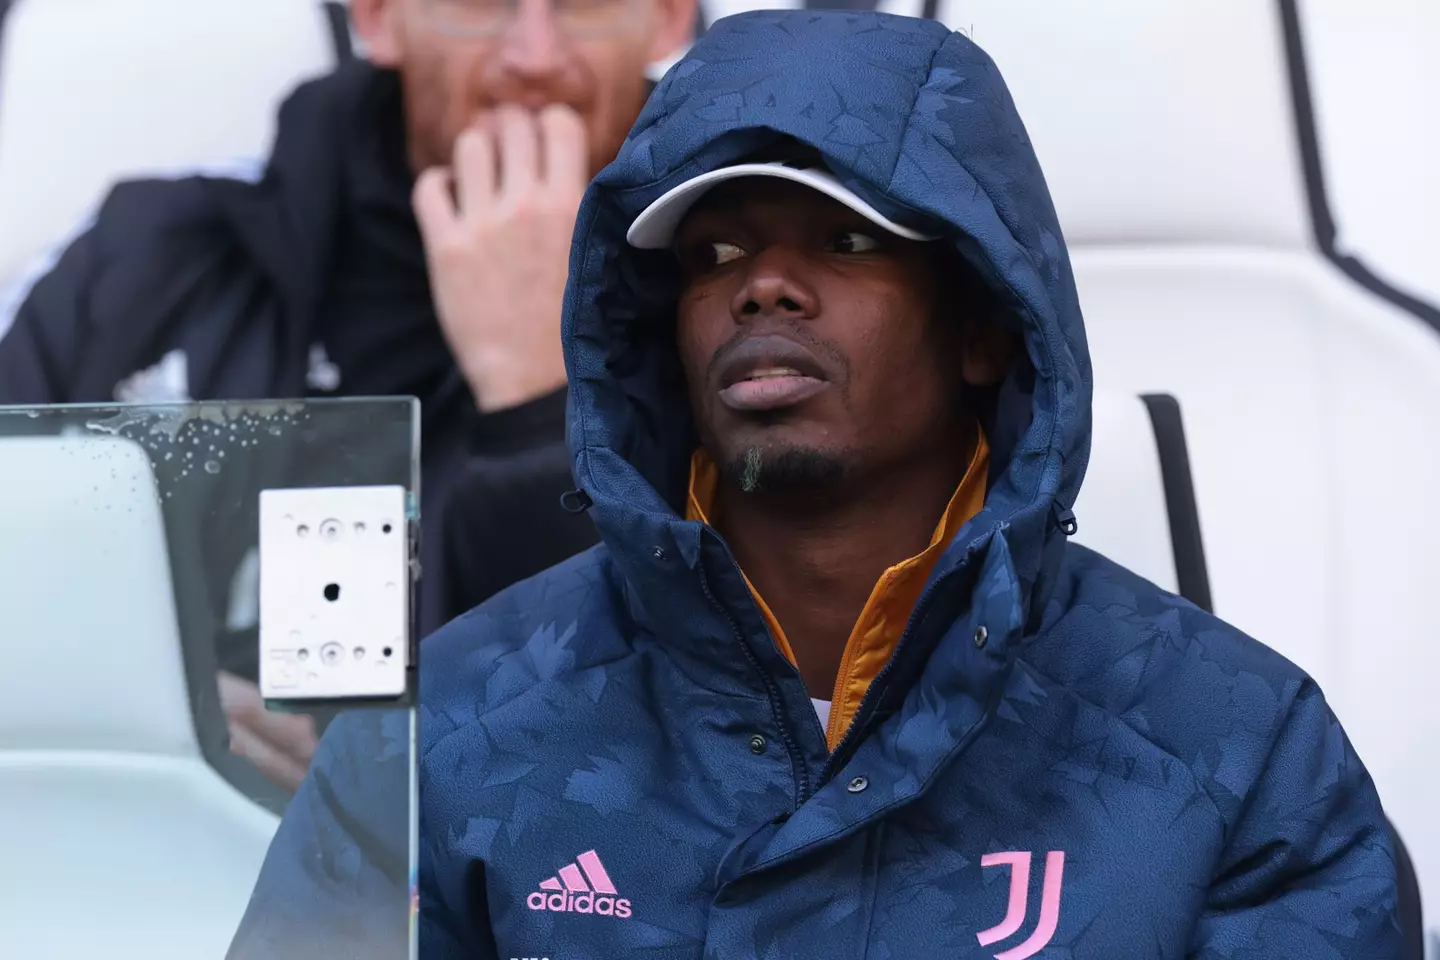 Paul Pogba has endured a frustrating start to his Juventus career.